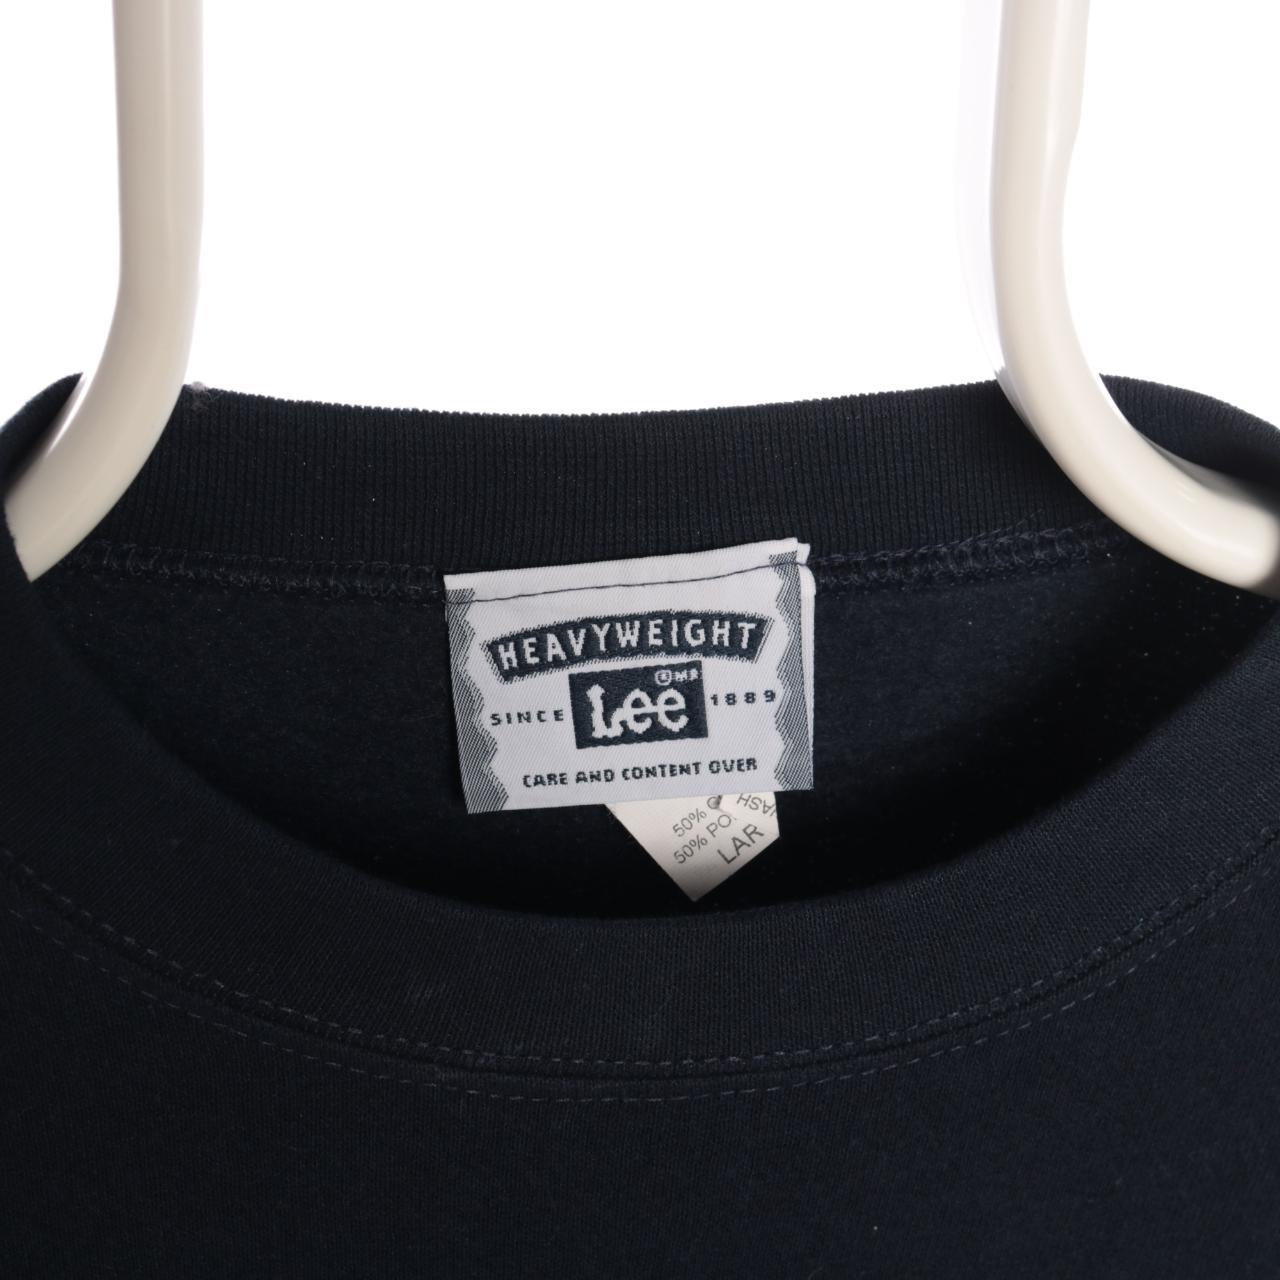 Product Image 4 - Vintage Lee Sweatshirt

Lee 90's Sweatshirt
Crewneck